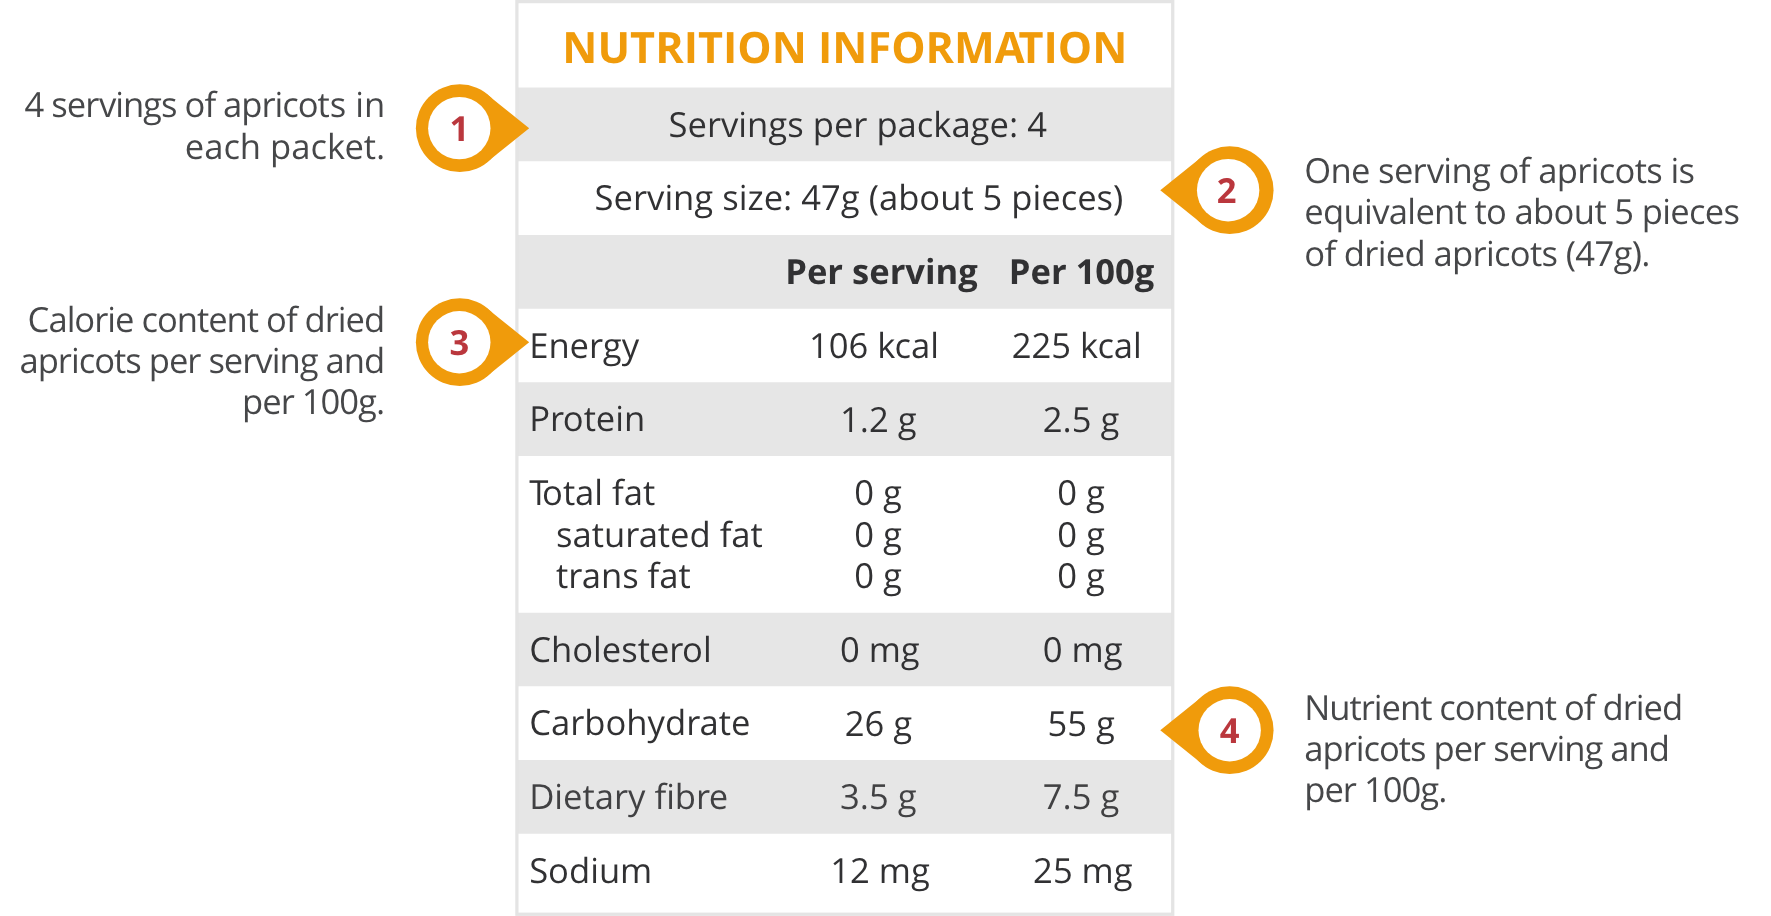 Understanding the Nutrition Information Panel (NIP)